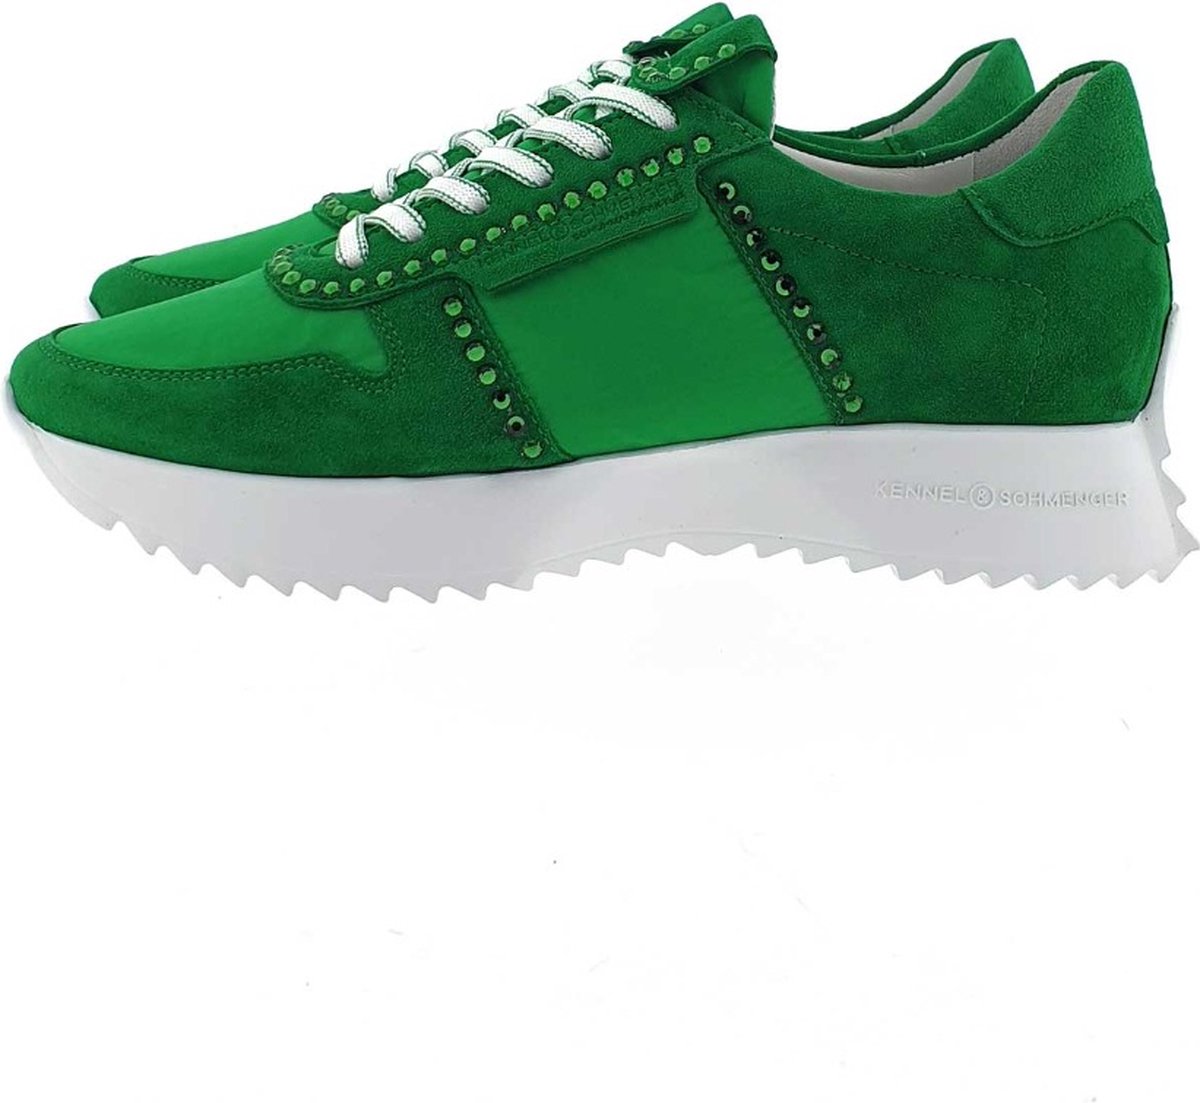 Kennel & Schmenger 18070 sneaker met strass groen, 37 / 4